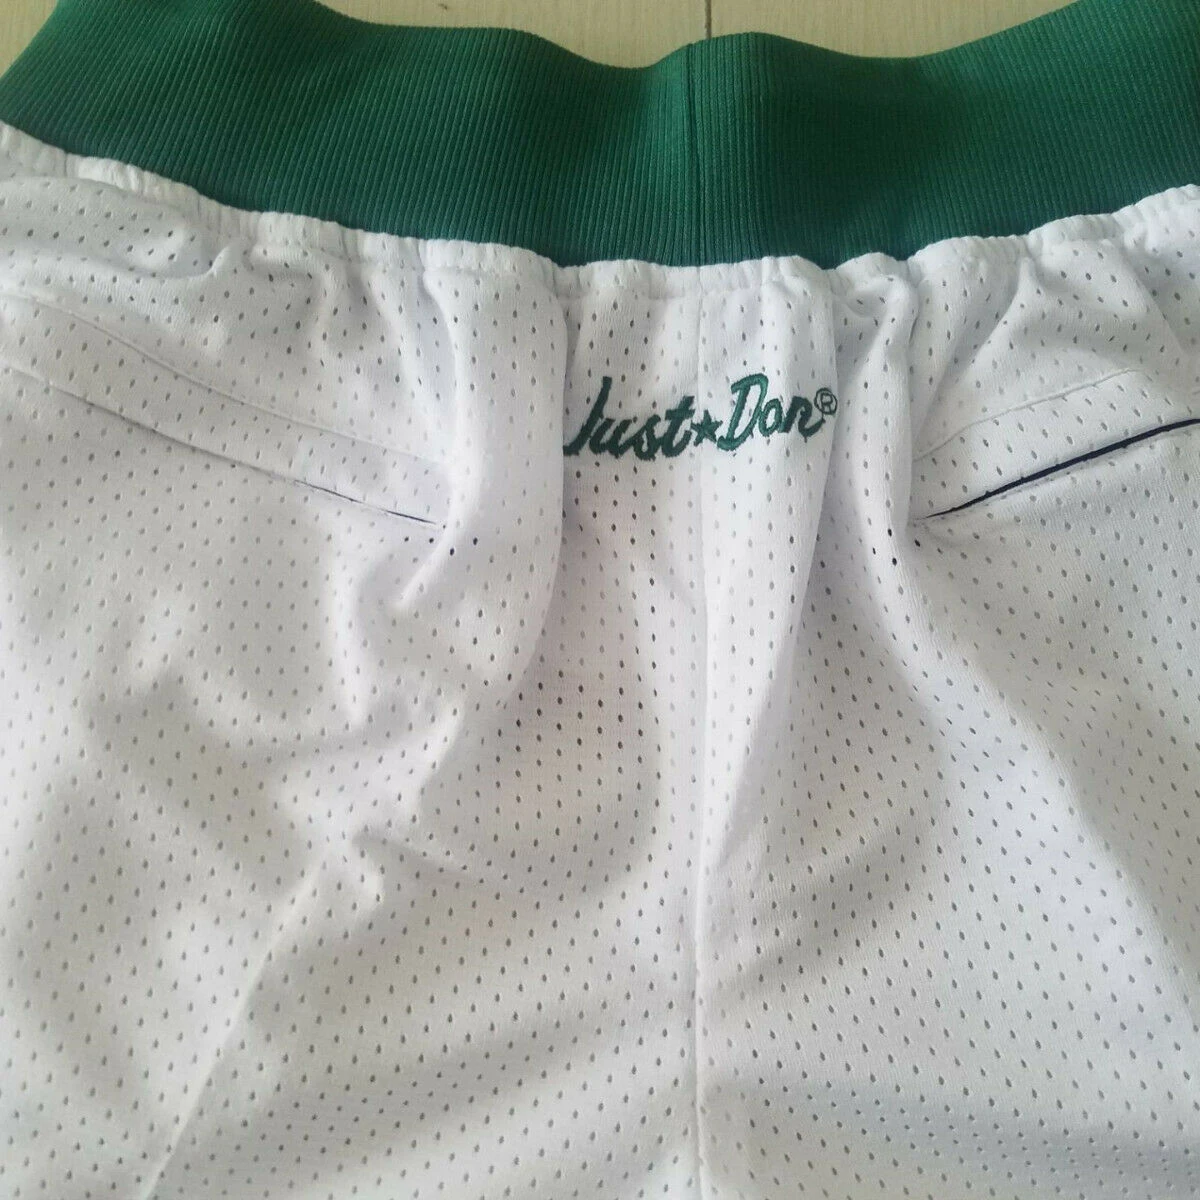 Boston Celtics White JUST DON Shorts